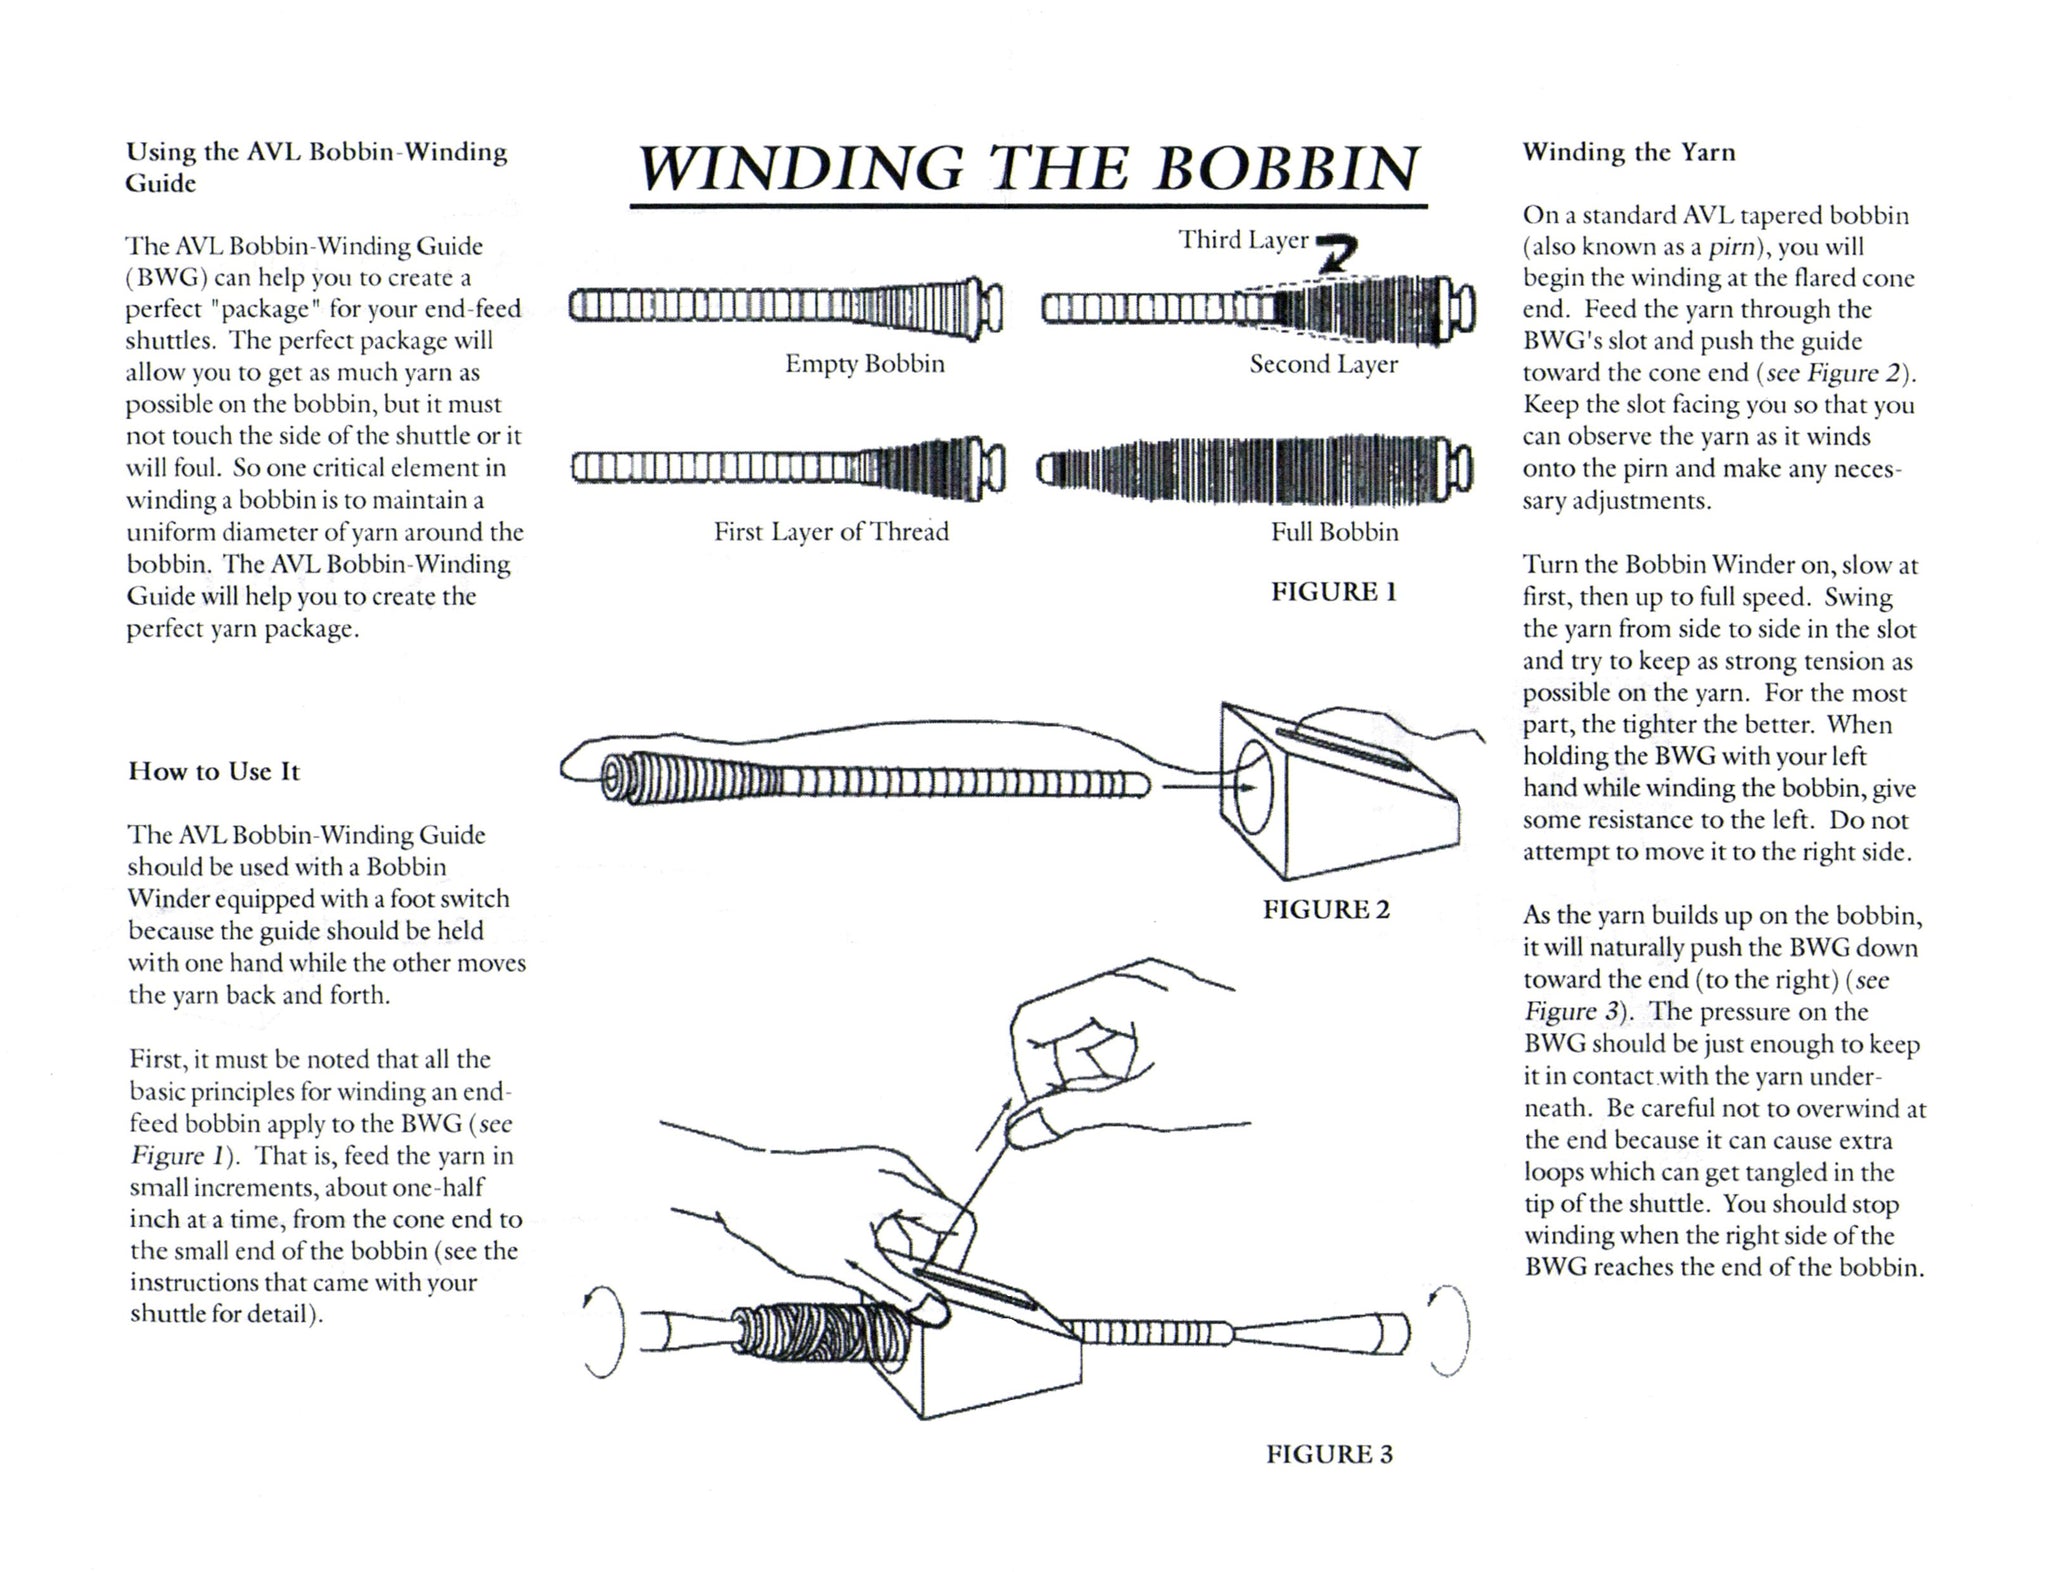 How to make a yarn bobbin (Tutorial Video)